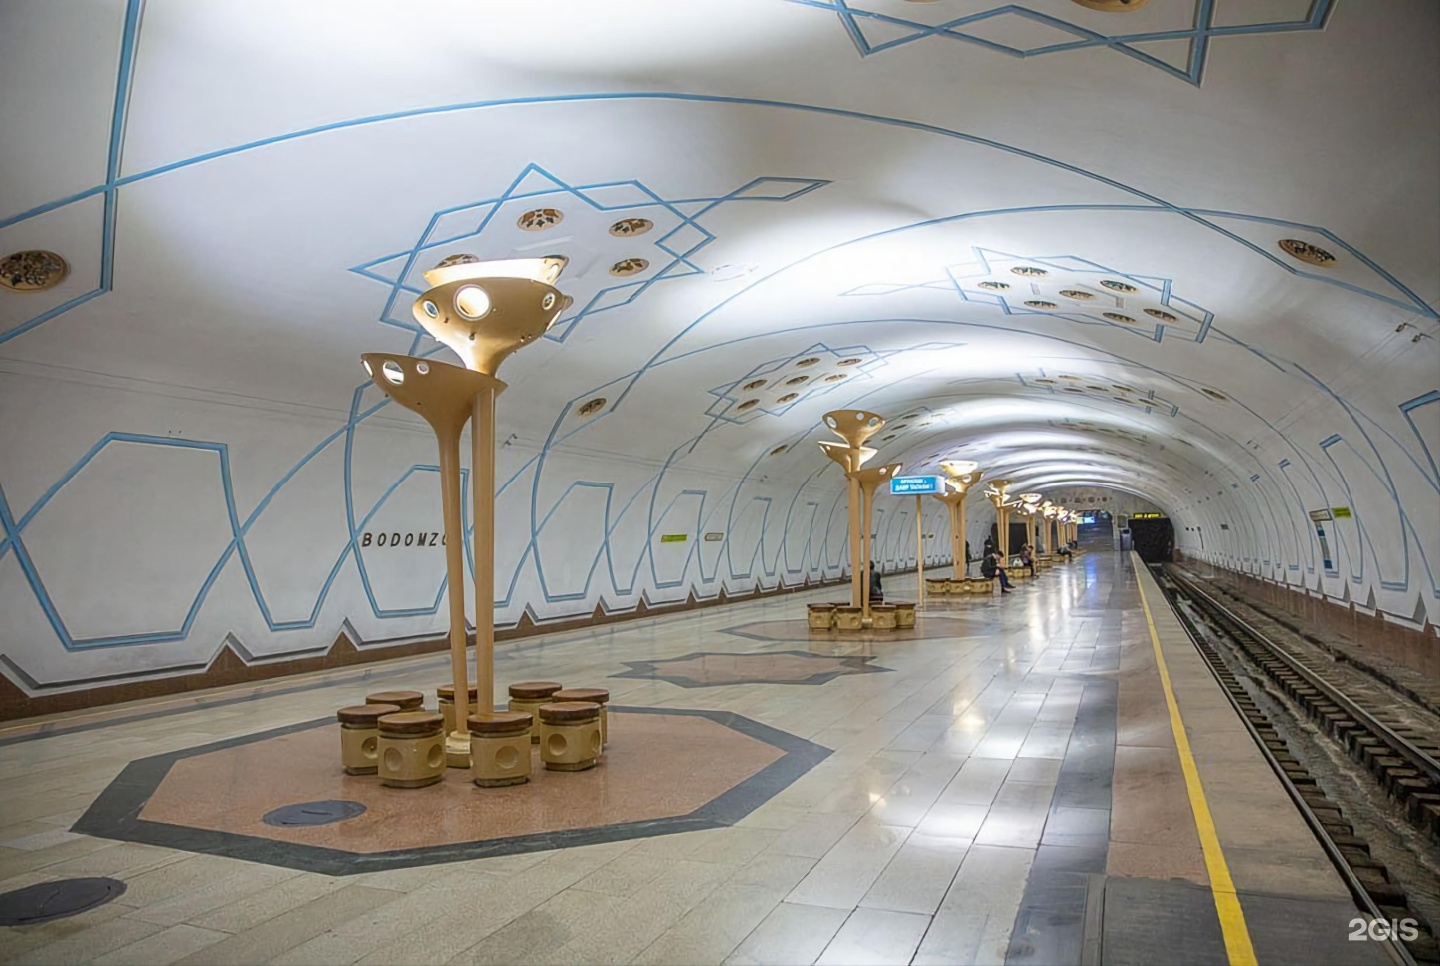 станции ташкентского метро названия